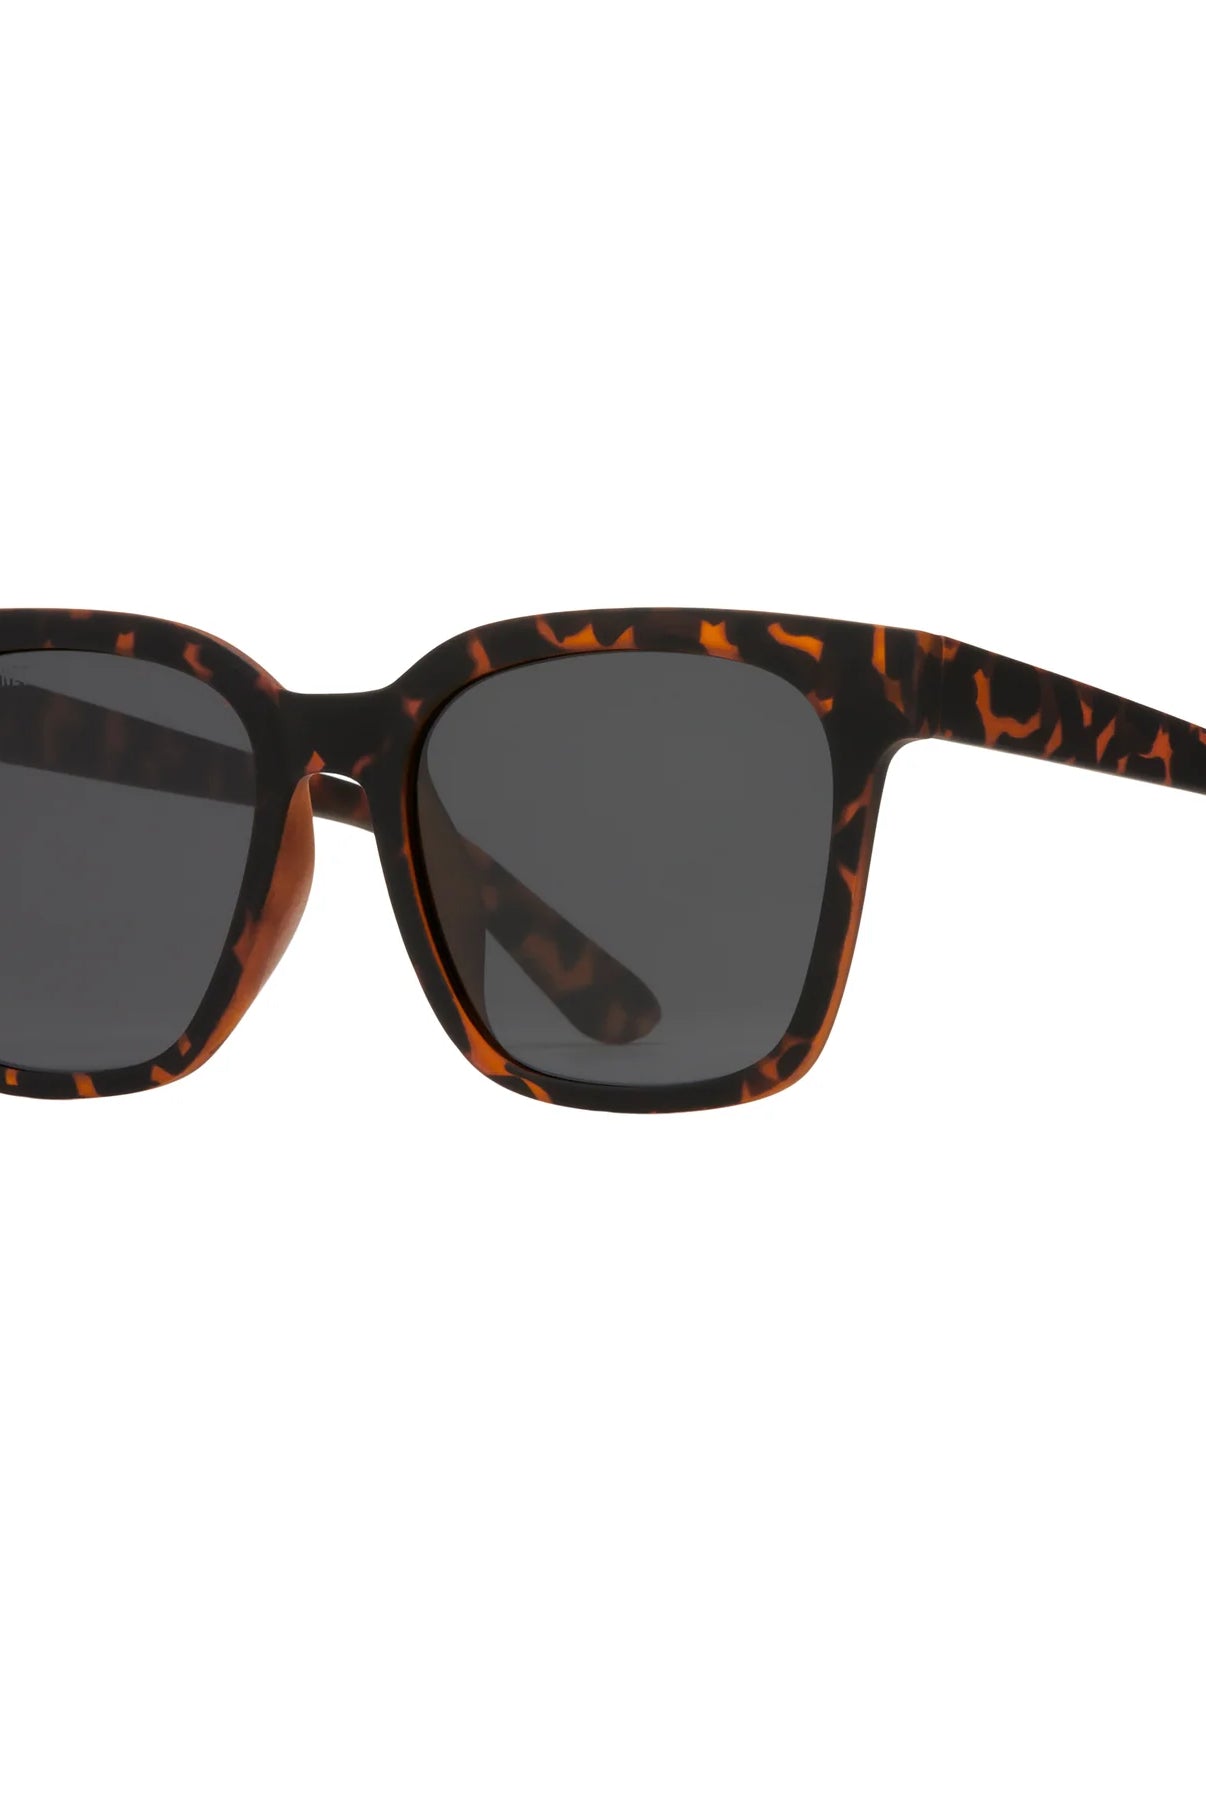 Brown Tortoise Sunglasses Apex Ethical Boutique